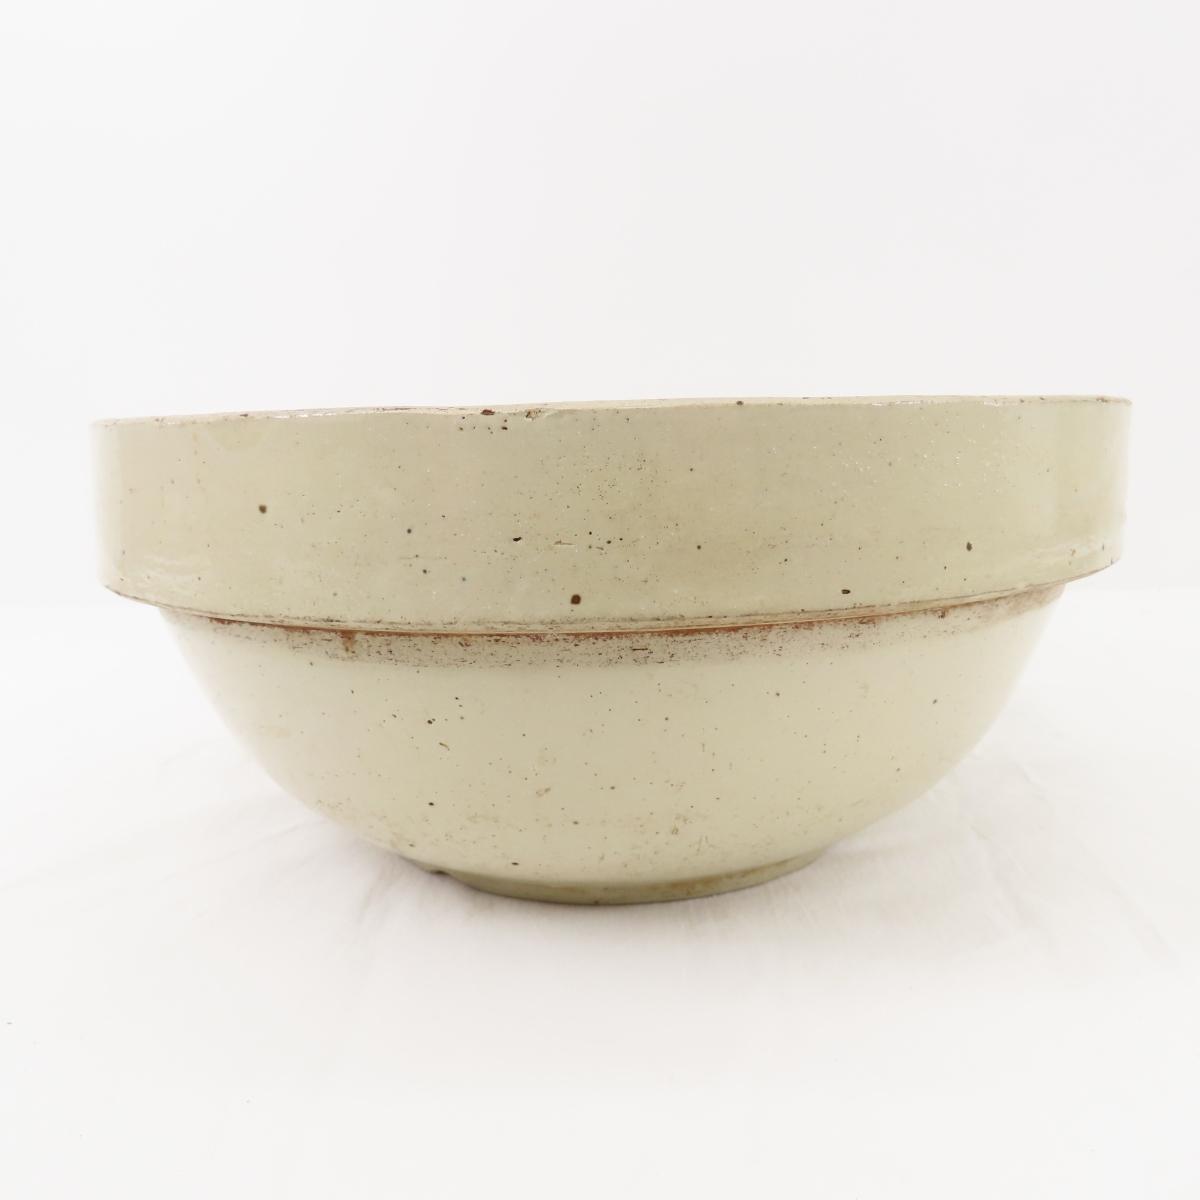 3 Assorted Stoneware Bowls